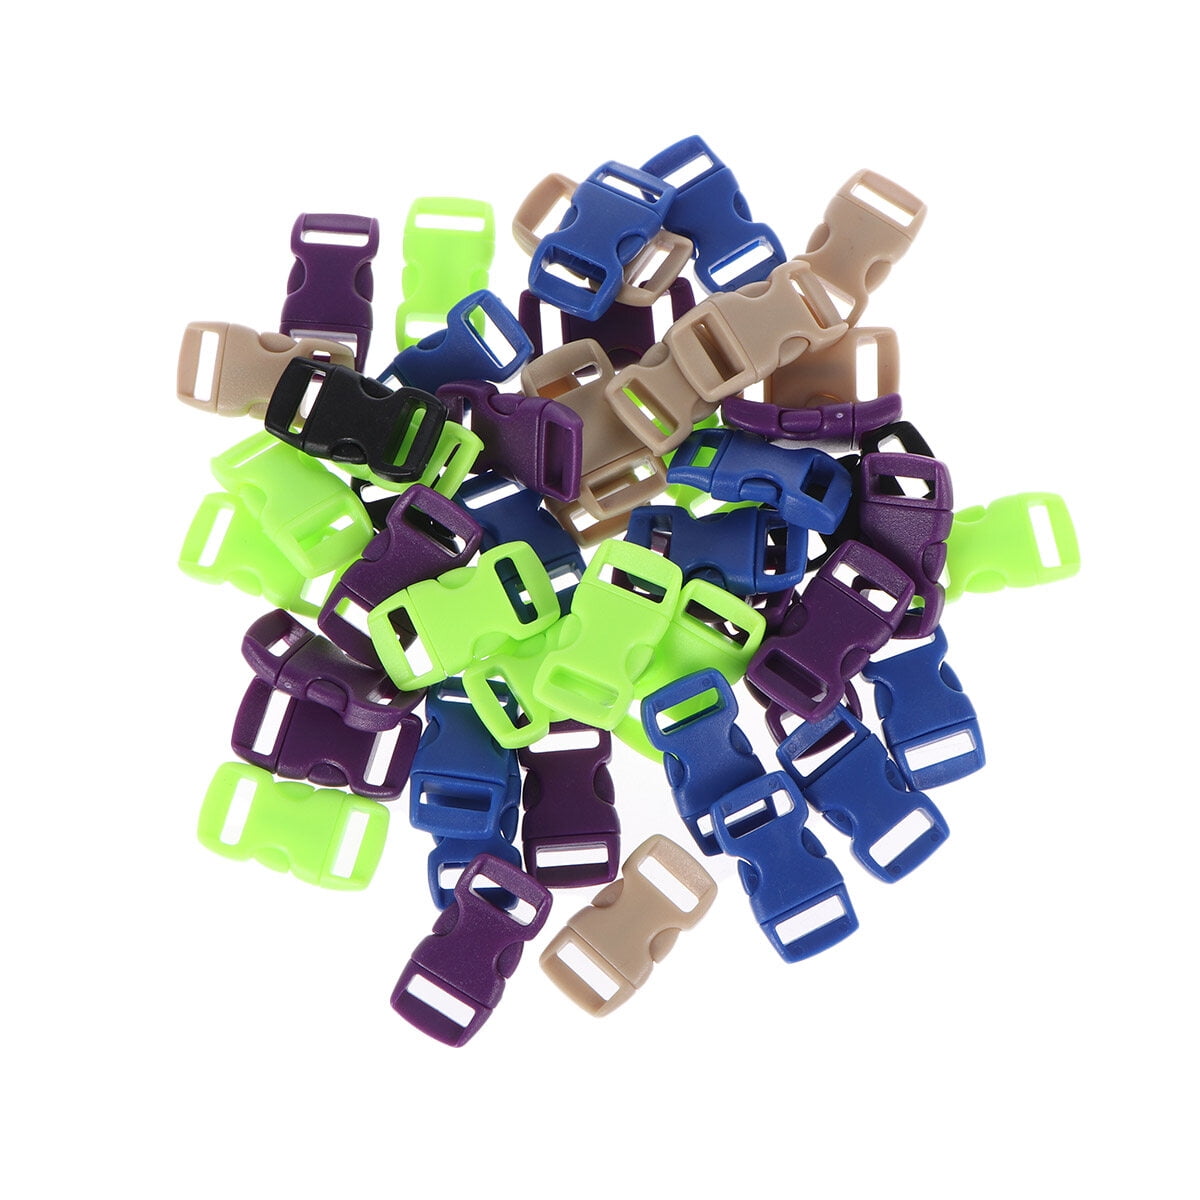 50pcs Plastic Strap Buckles Adjustable Multicolored Side Release ...